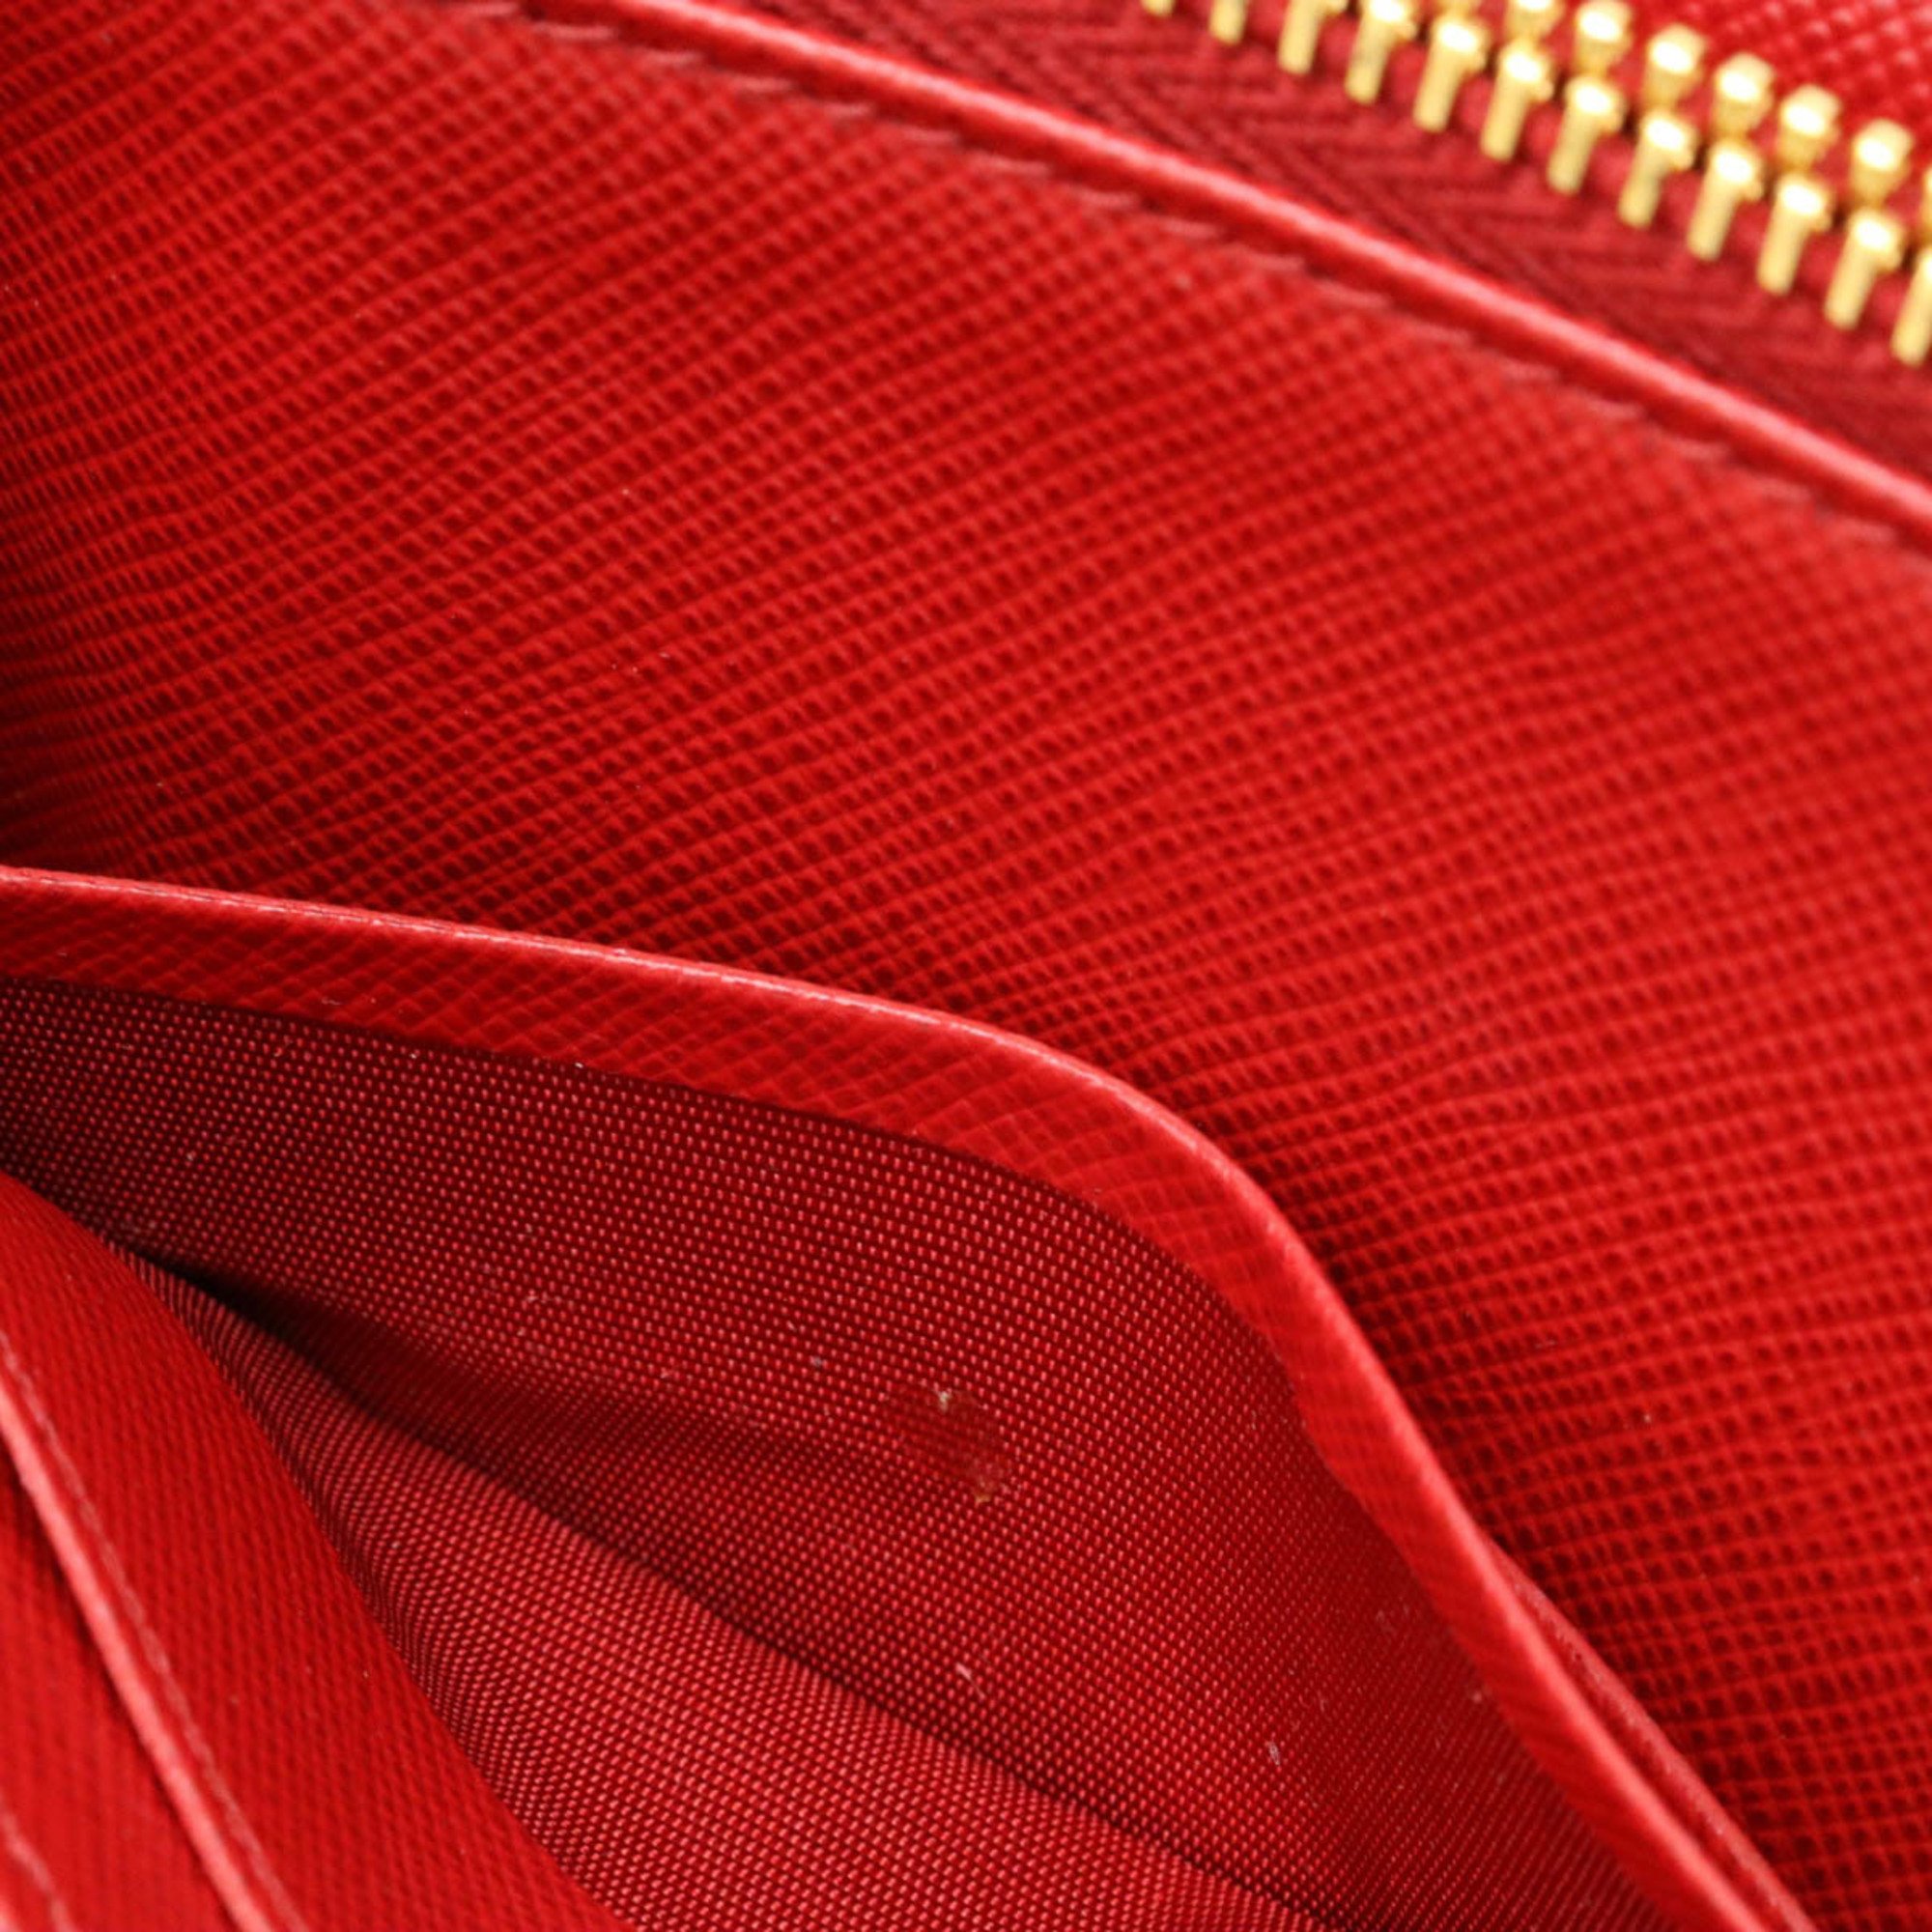 PRADA SAFFIANO METAL shoulder wallet, bag, clutch leather, red, 1M1361